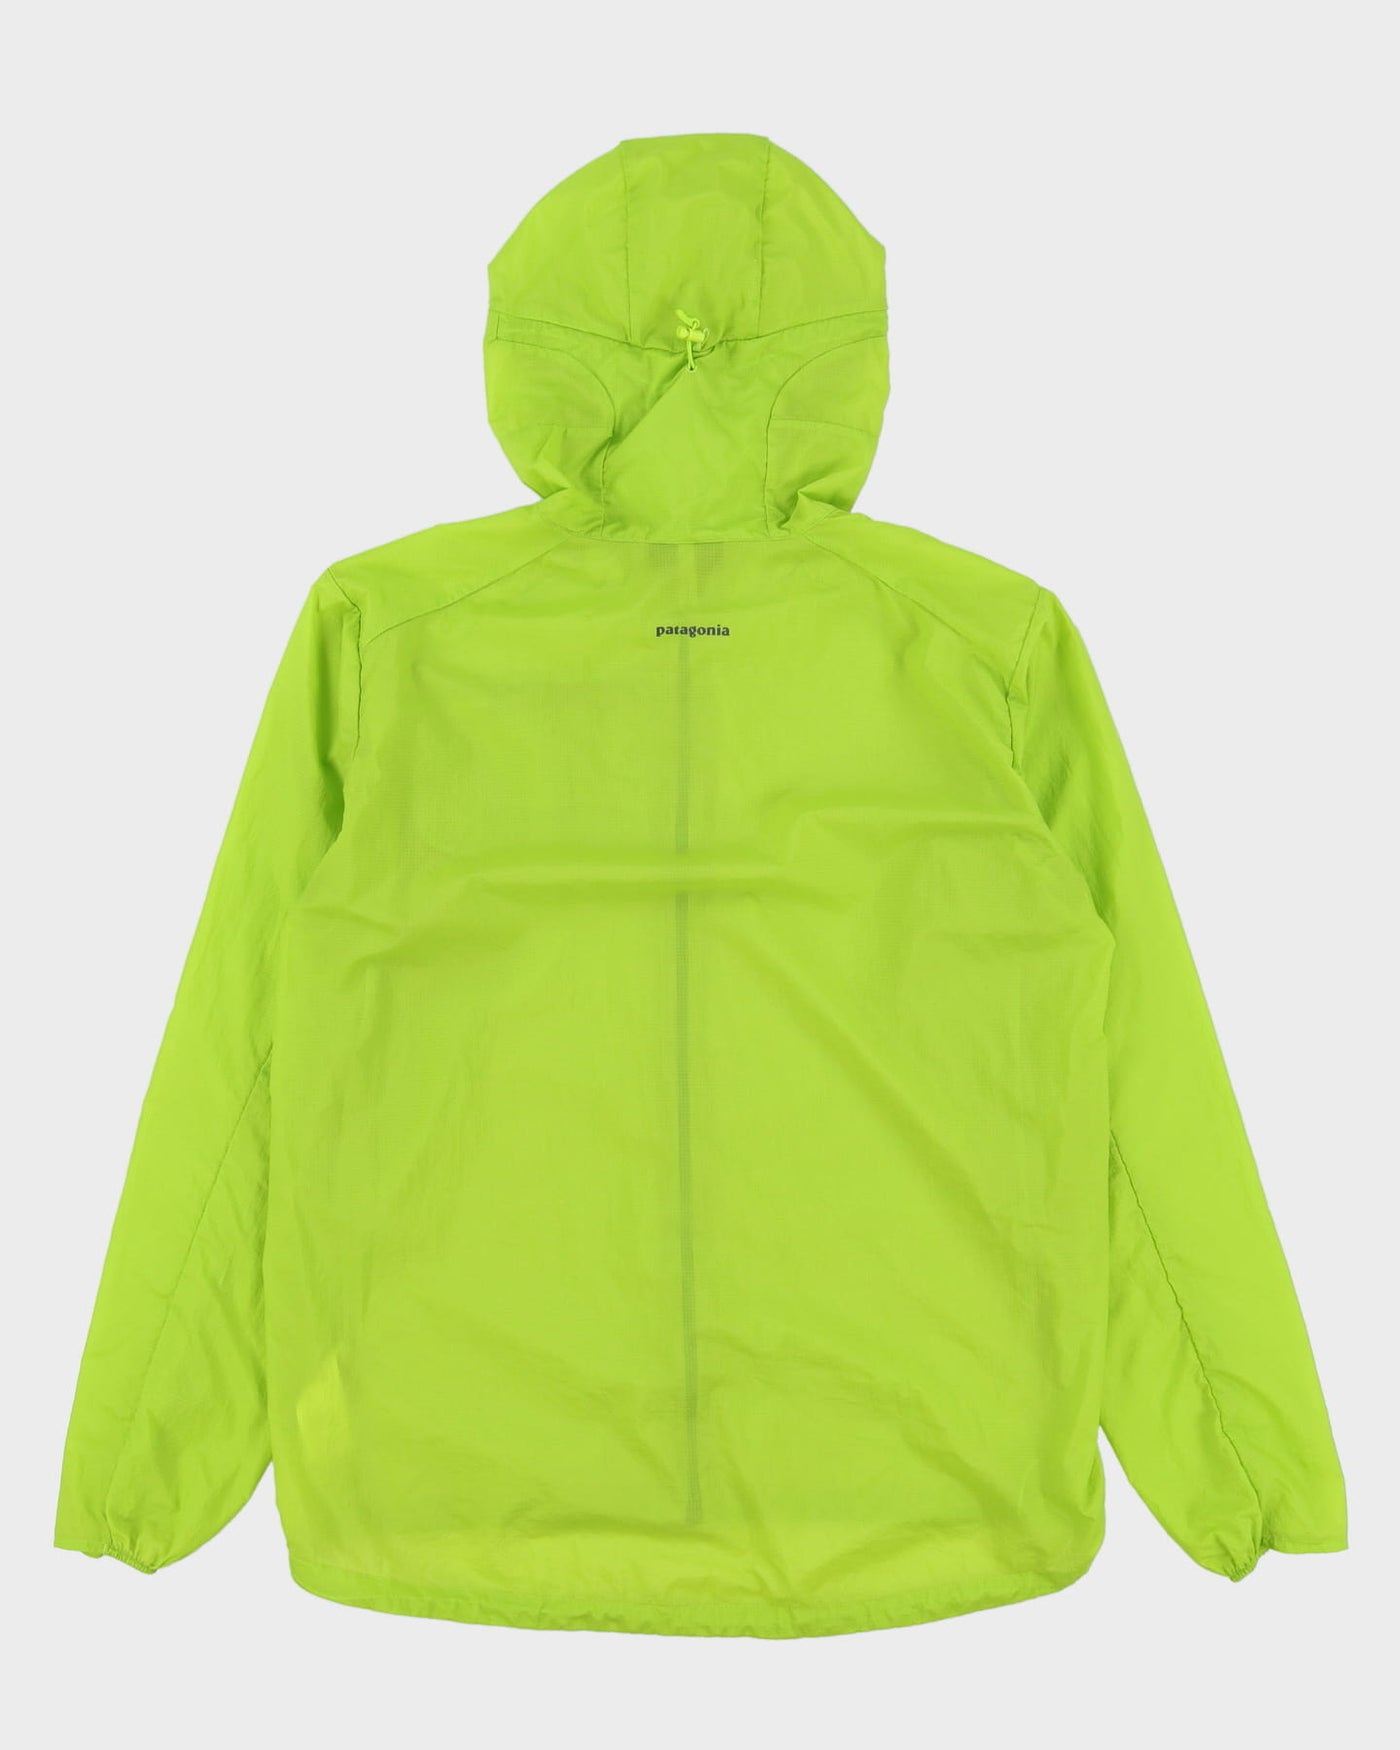 Patagonia Green Hooded Anorak Jacket - L